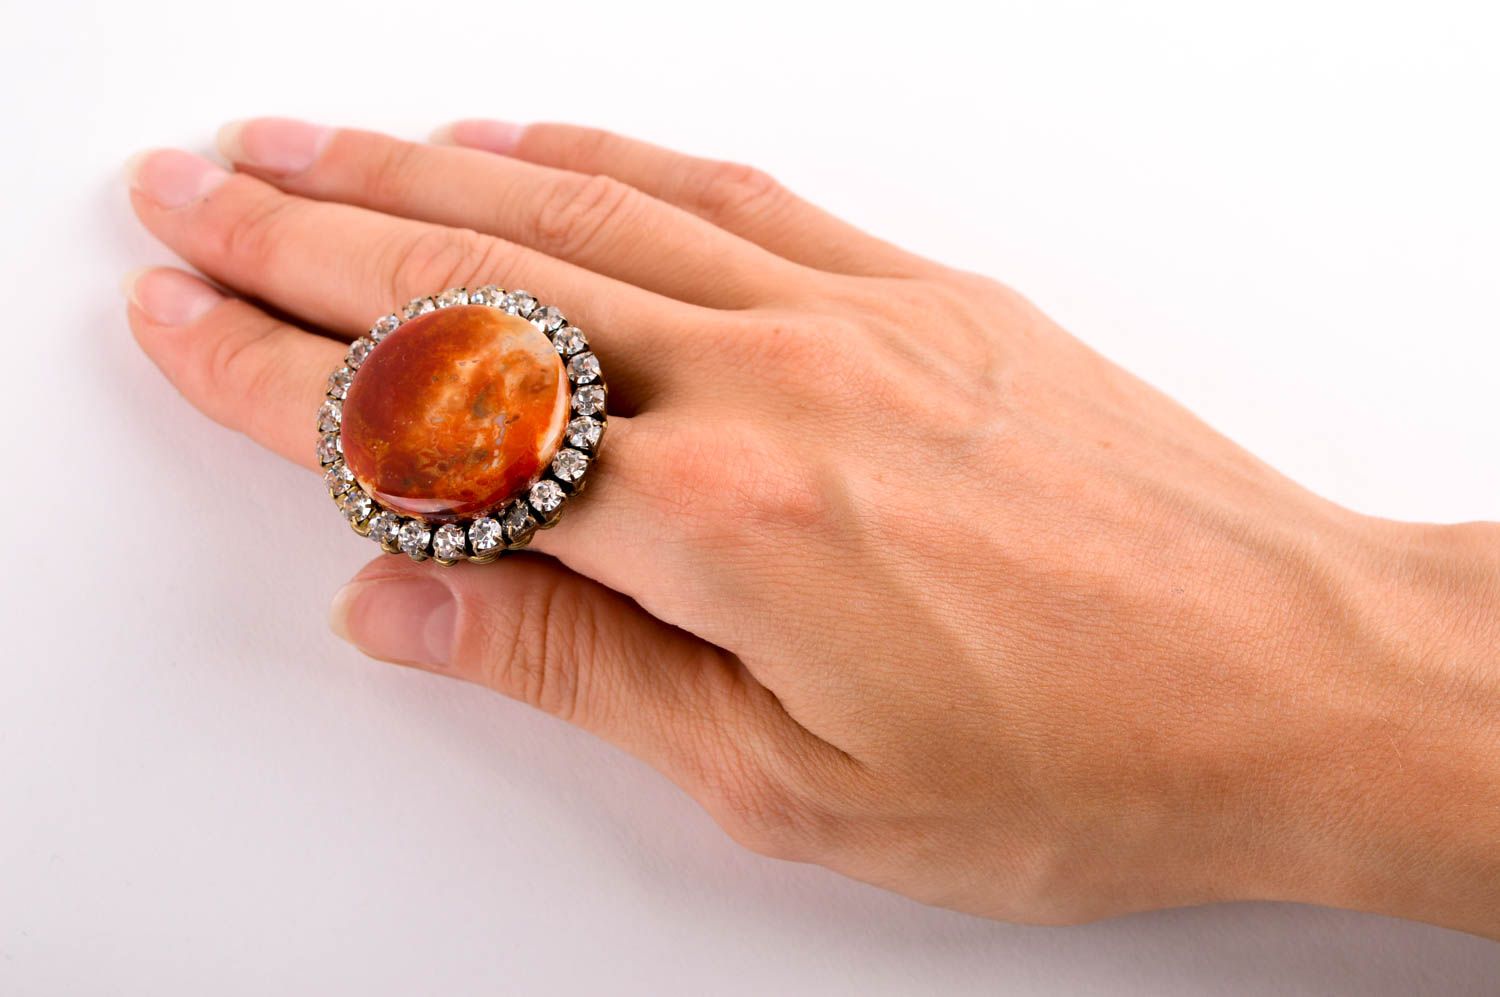 Handmade ring designer ring with stone unusual gift for women designer accessory photo 4